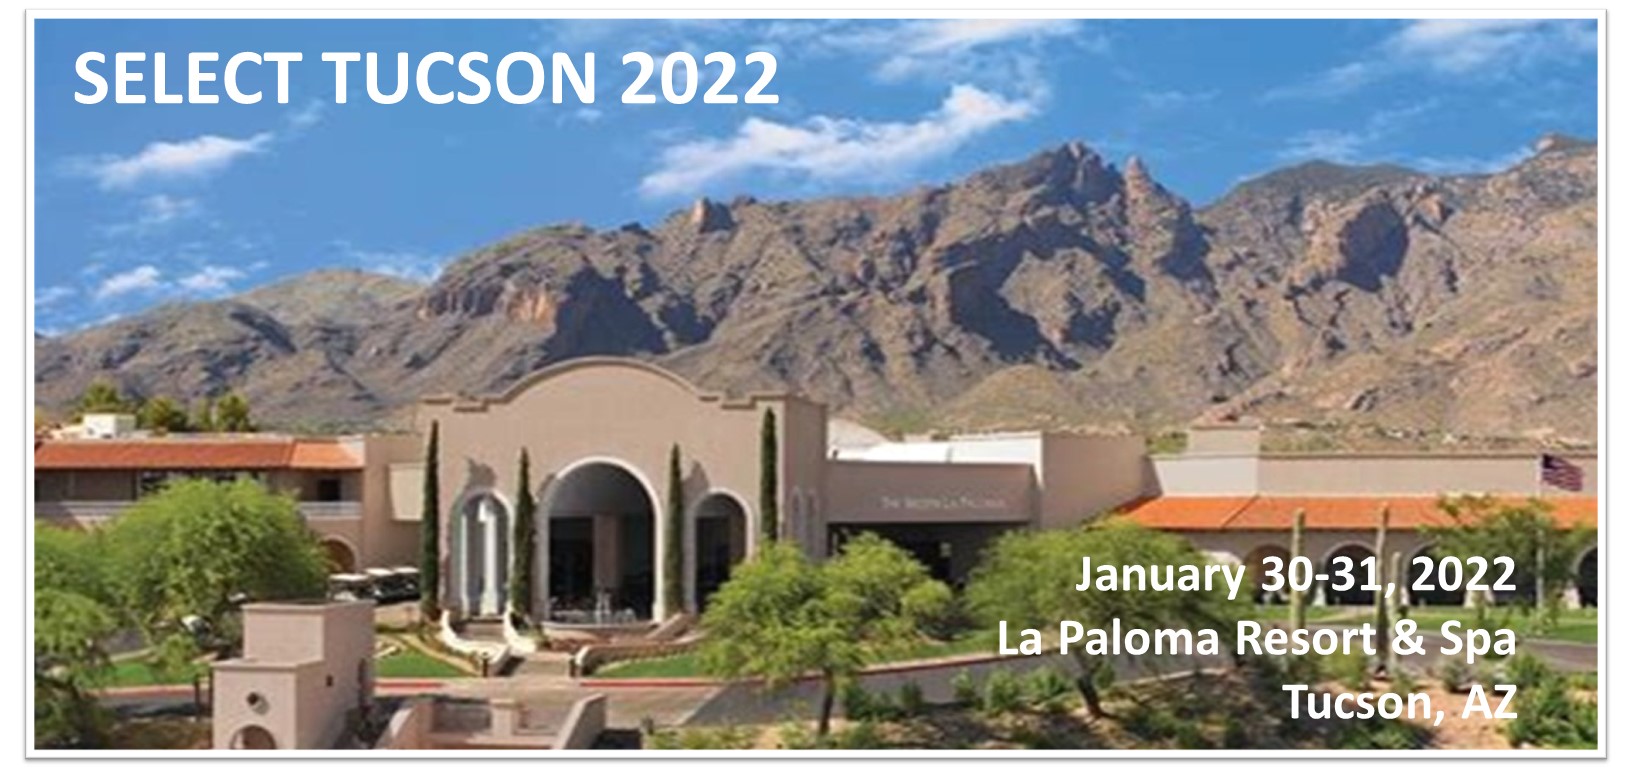 Select Tucson 2022